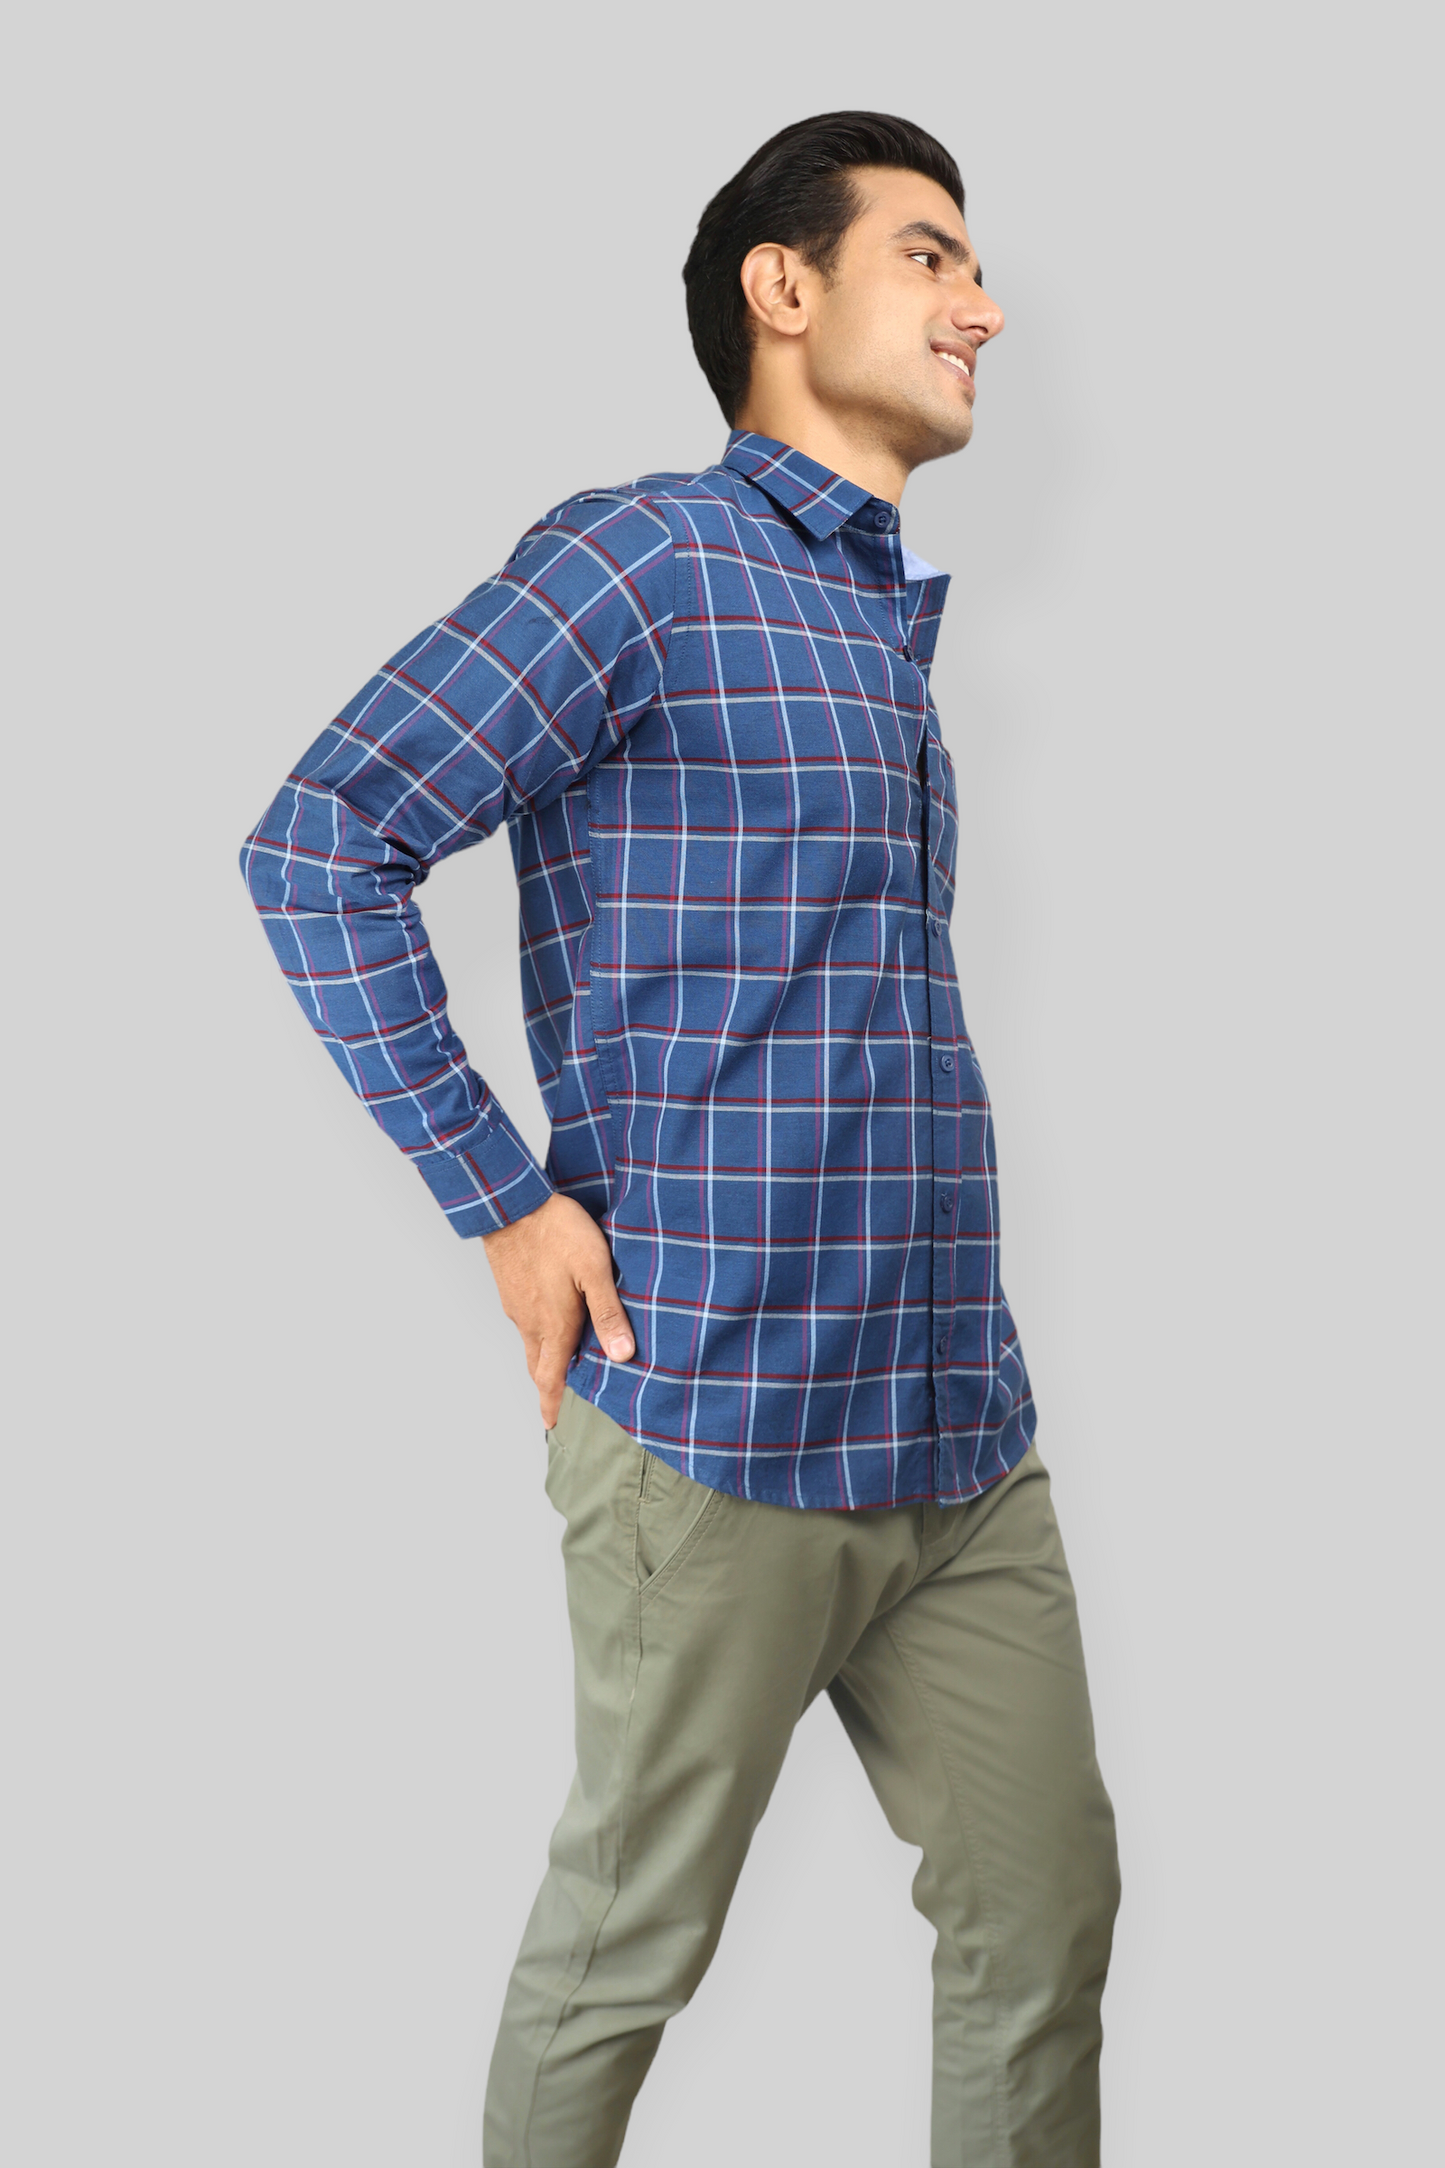 Blue Checks premium Cotton shirt for men